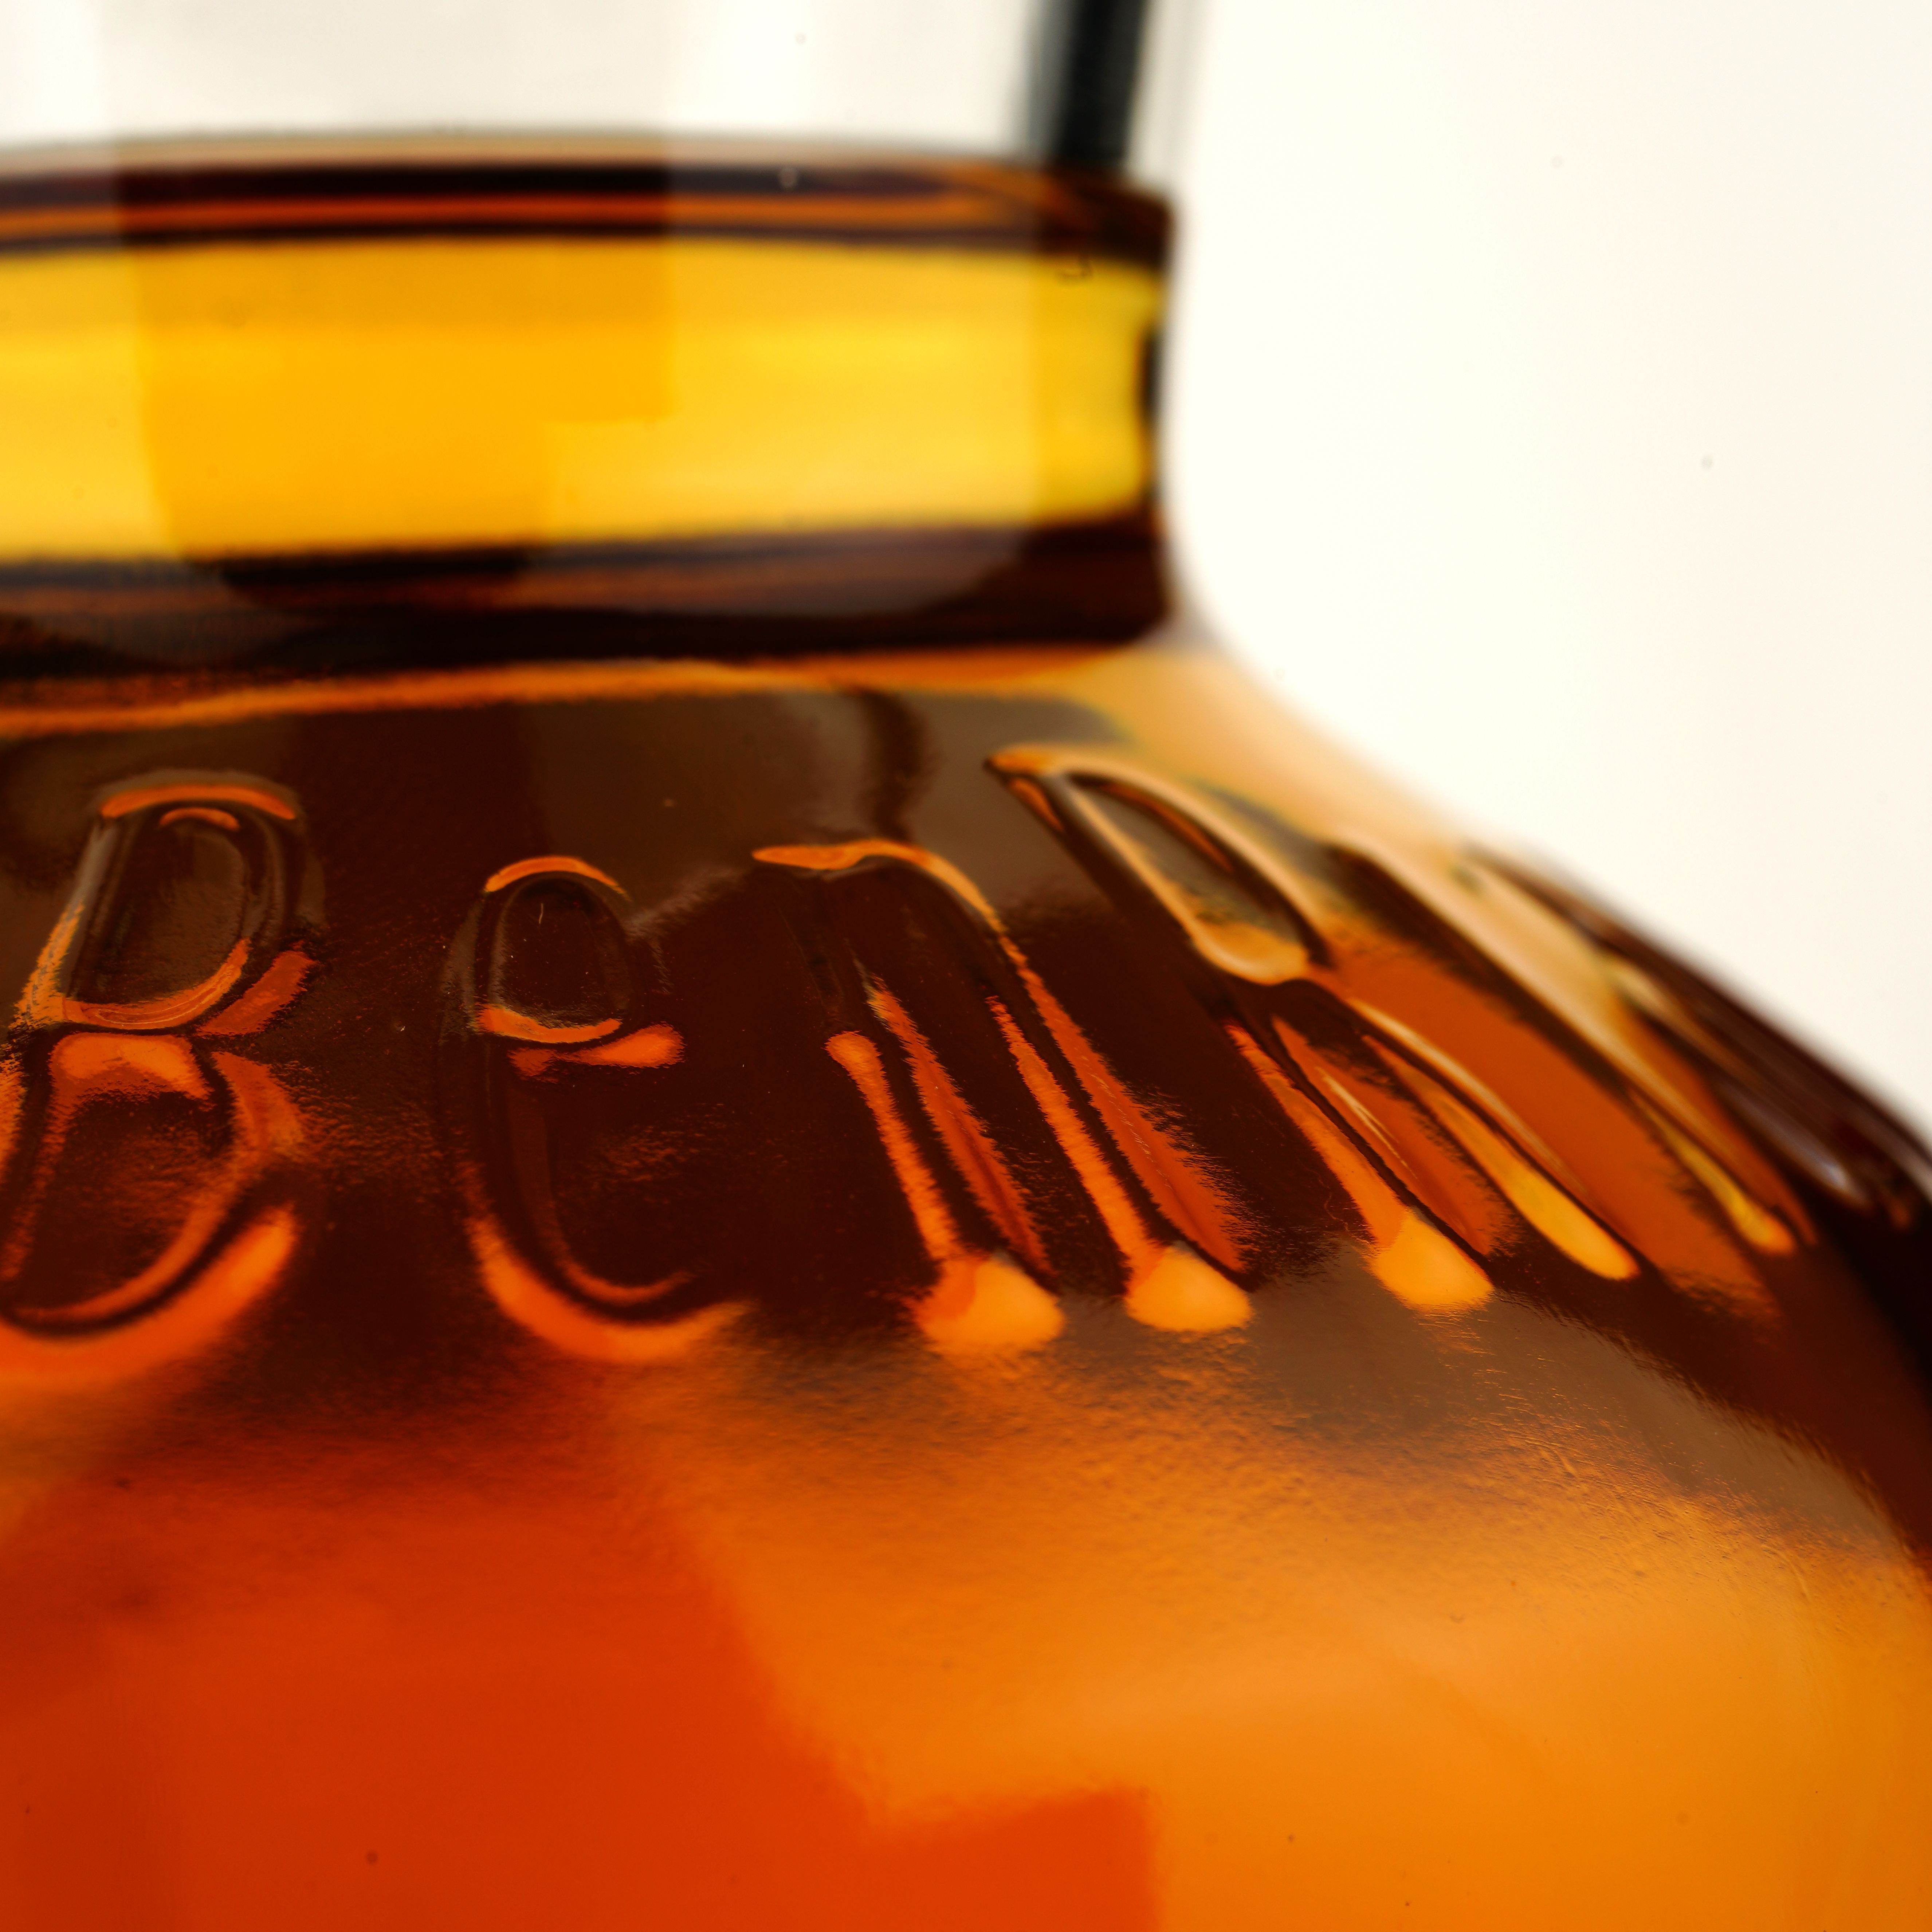 Виски BenRiach 32 Years Old Refill Bourbon Barrel Cask 7512 Single Malt Scotch Whisky, в подарочной упаковке, 44,5%, 0,7 л - фото 4